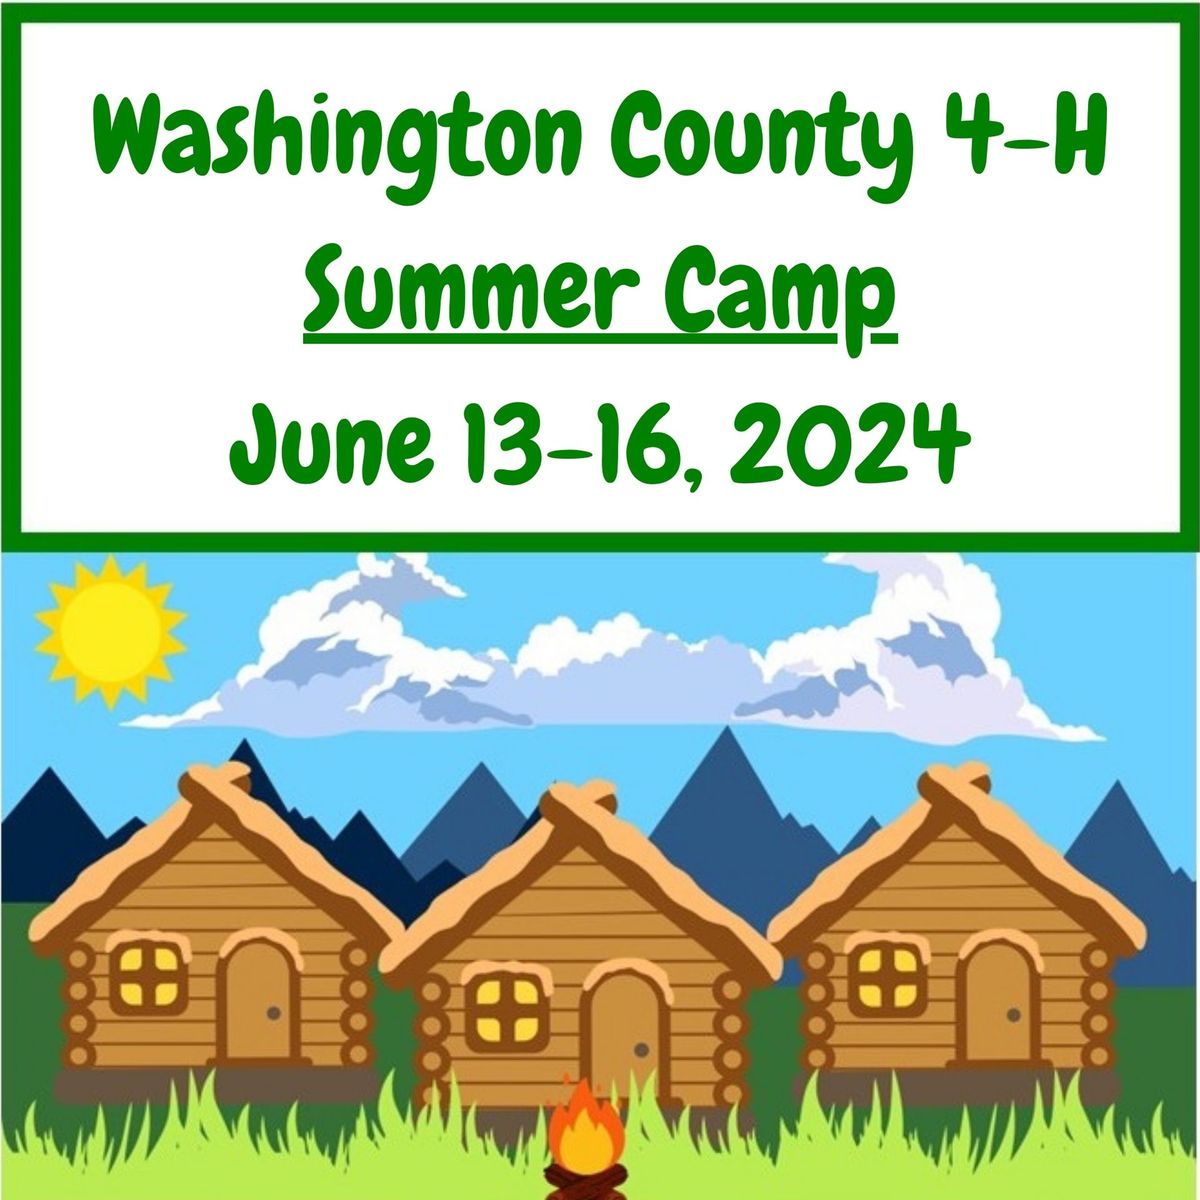 Washington County 4-H Summer Camp